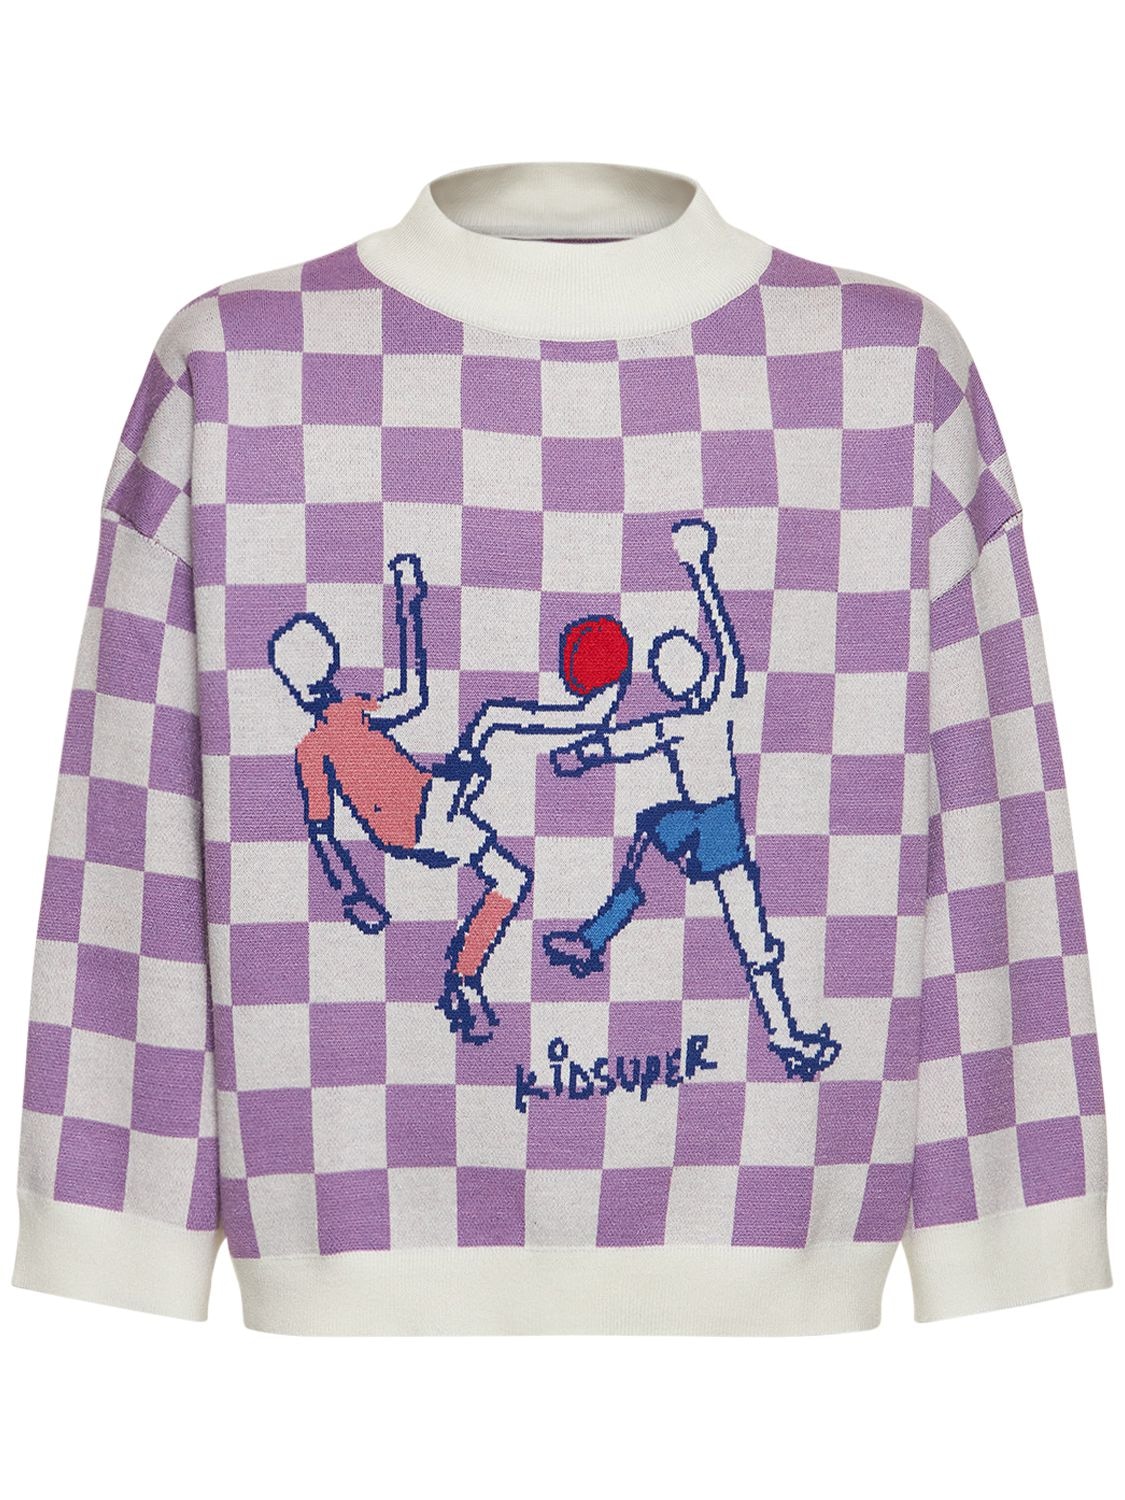 KIDSUPER STUDIOS Checkered Soccer Sweater